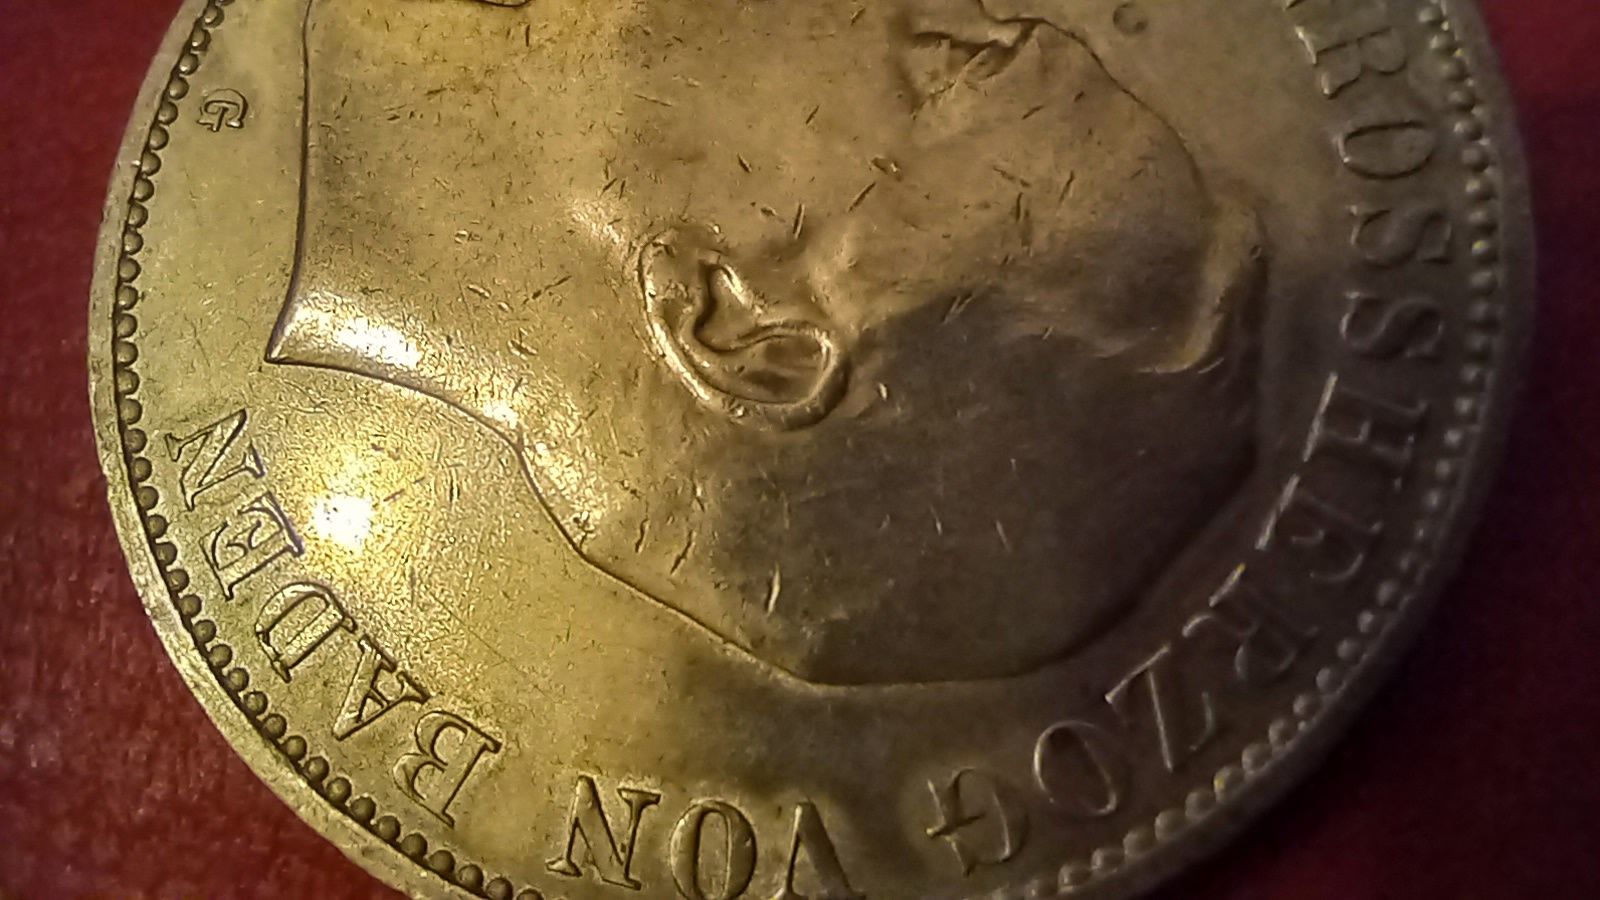 Монета 5 марок 1913 г. Фридрих 2й. Серебро.